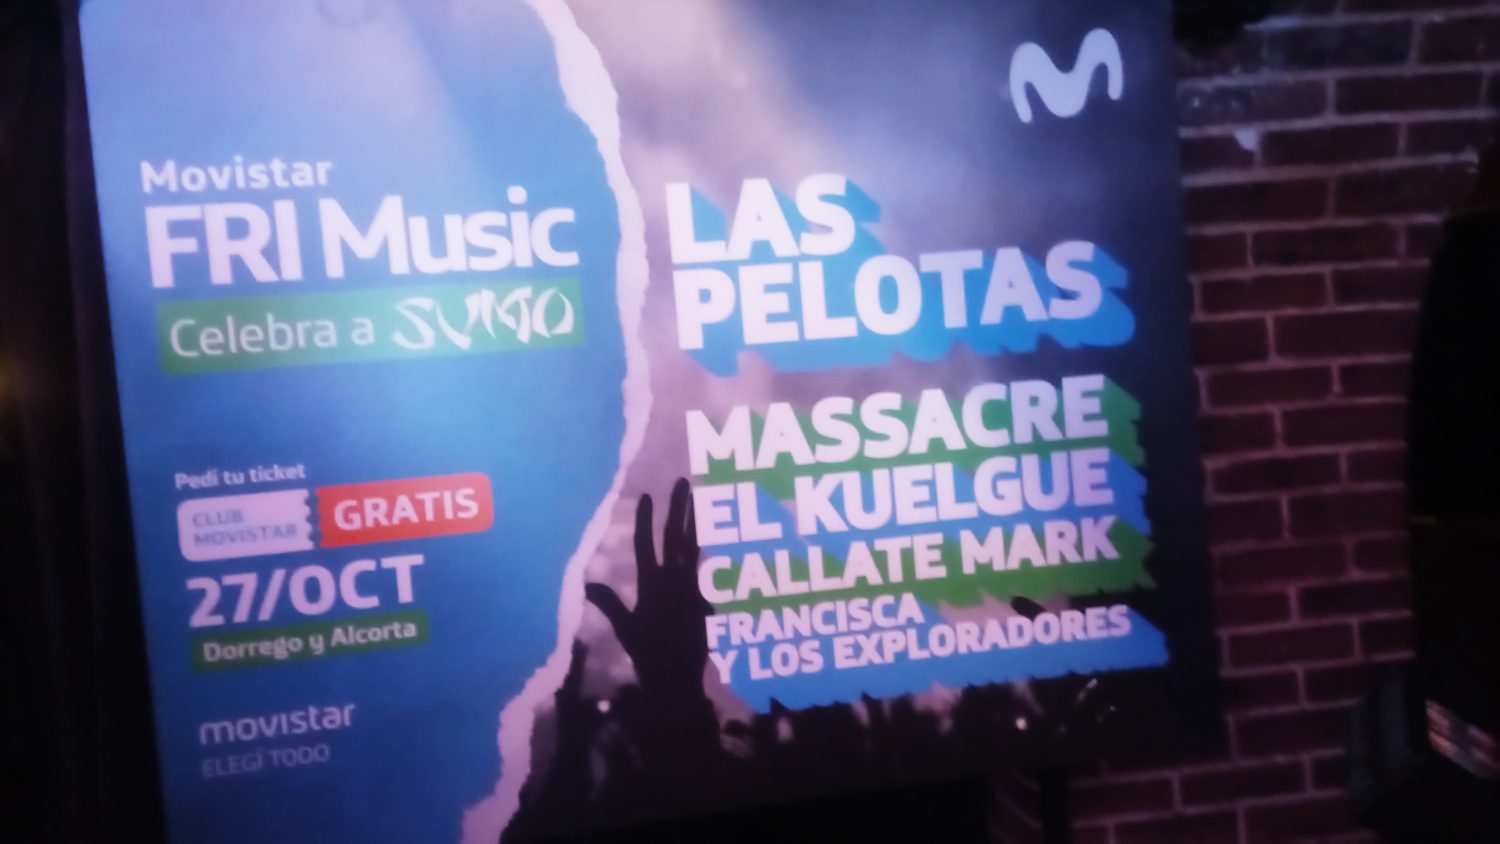 Movistar Fri Music Celebra a Sumo